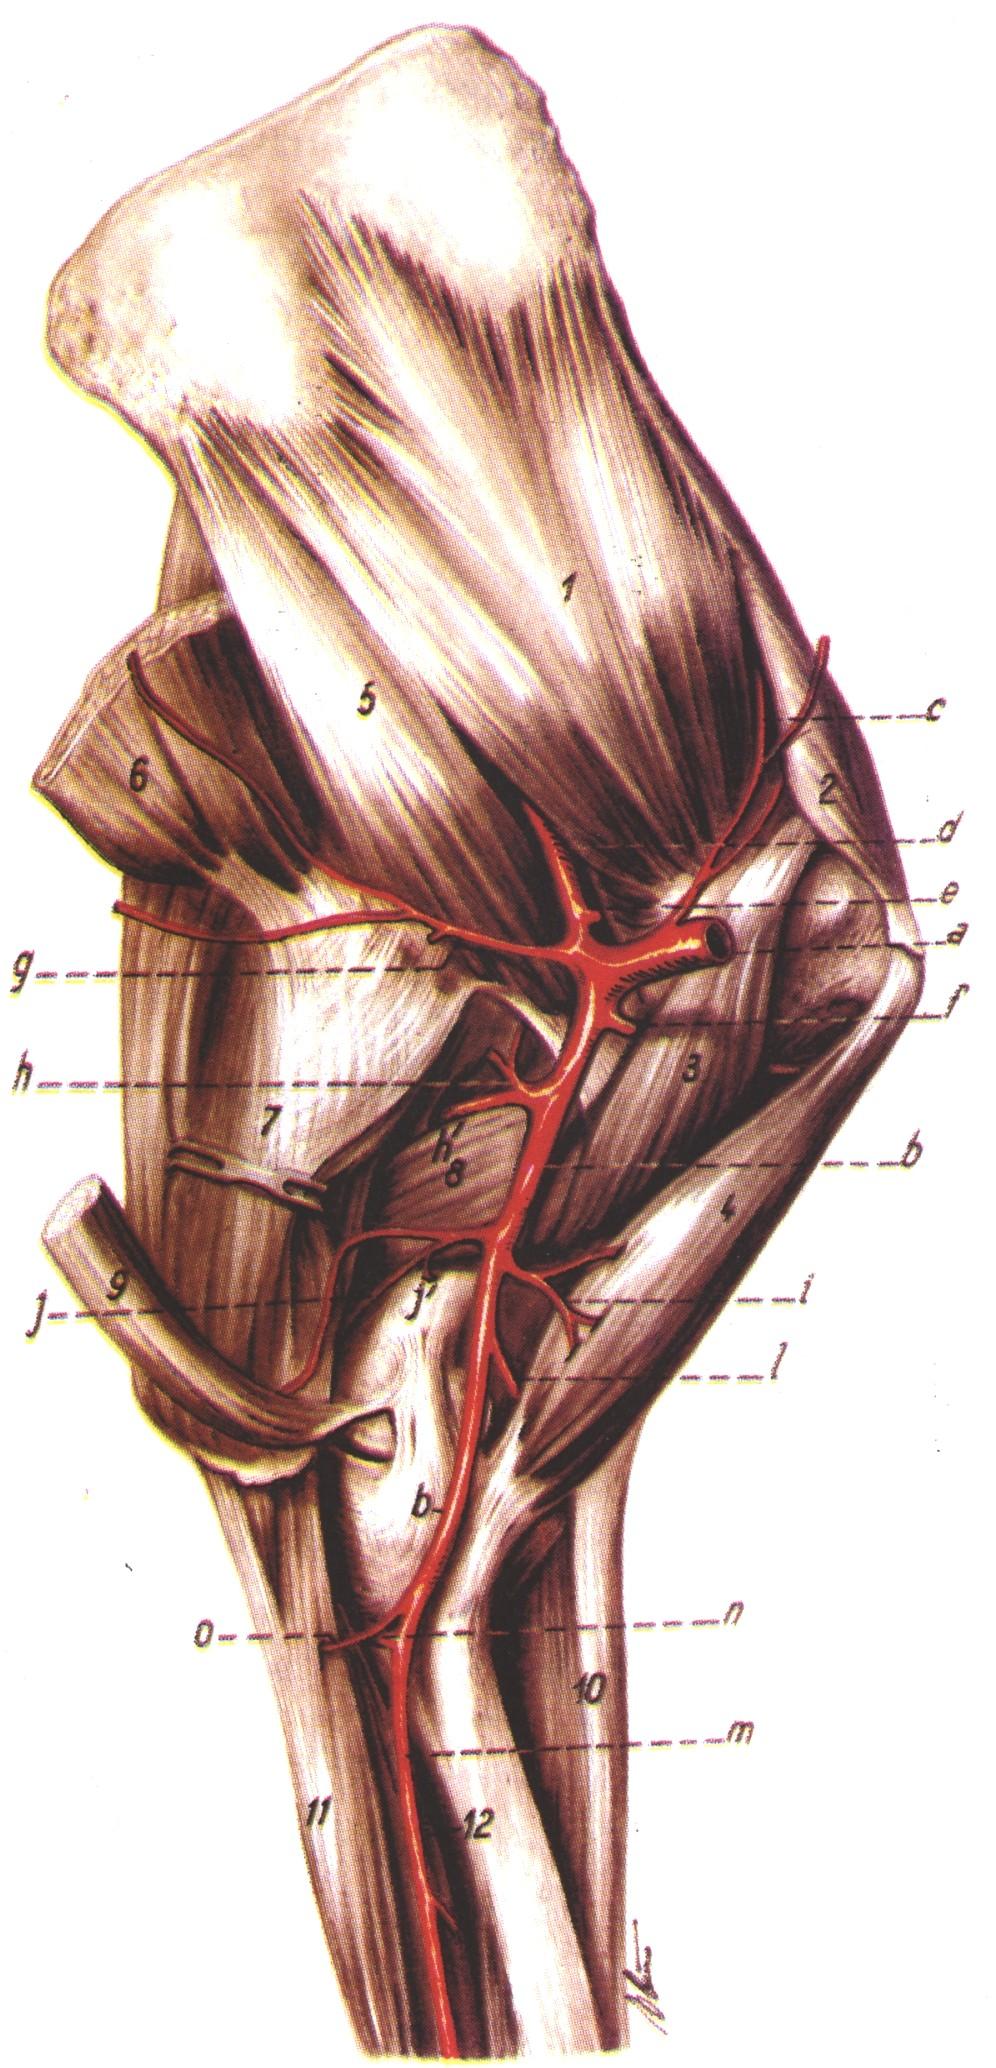 Vascularizatia muschiului latissimus dorsi artera toracodorsala (desen dupa Anatomie comparata la mamiferele domestice, R.